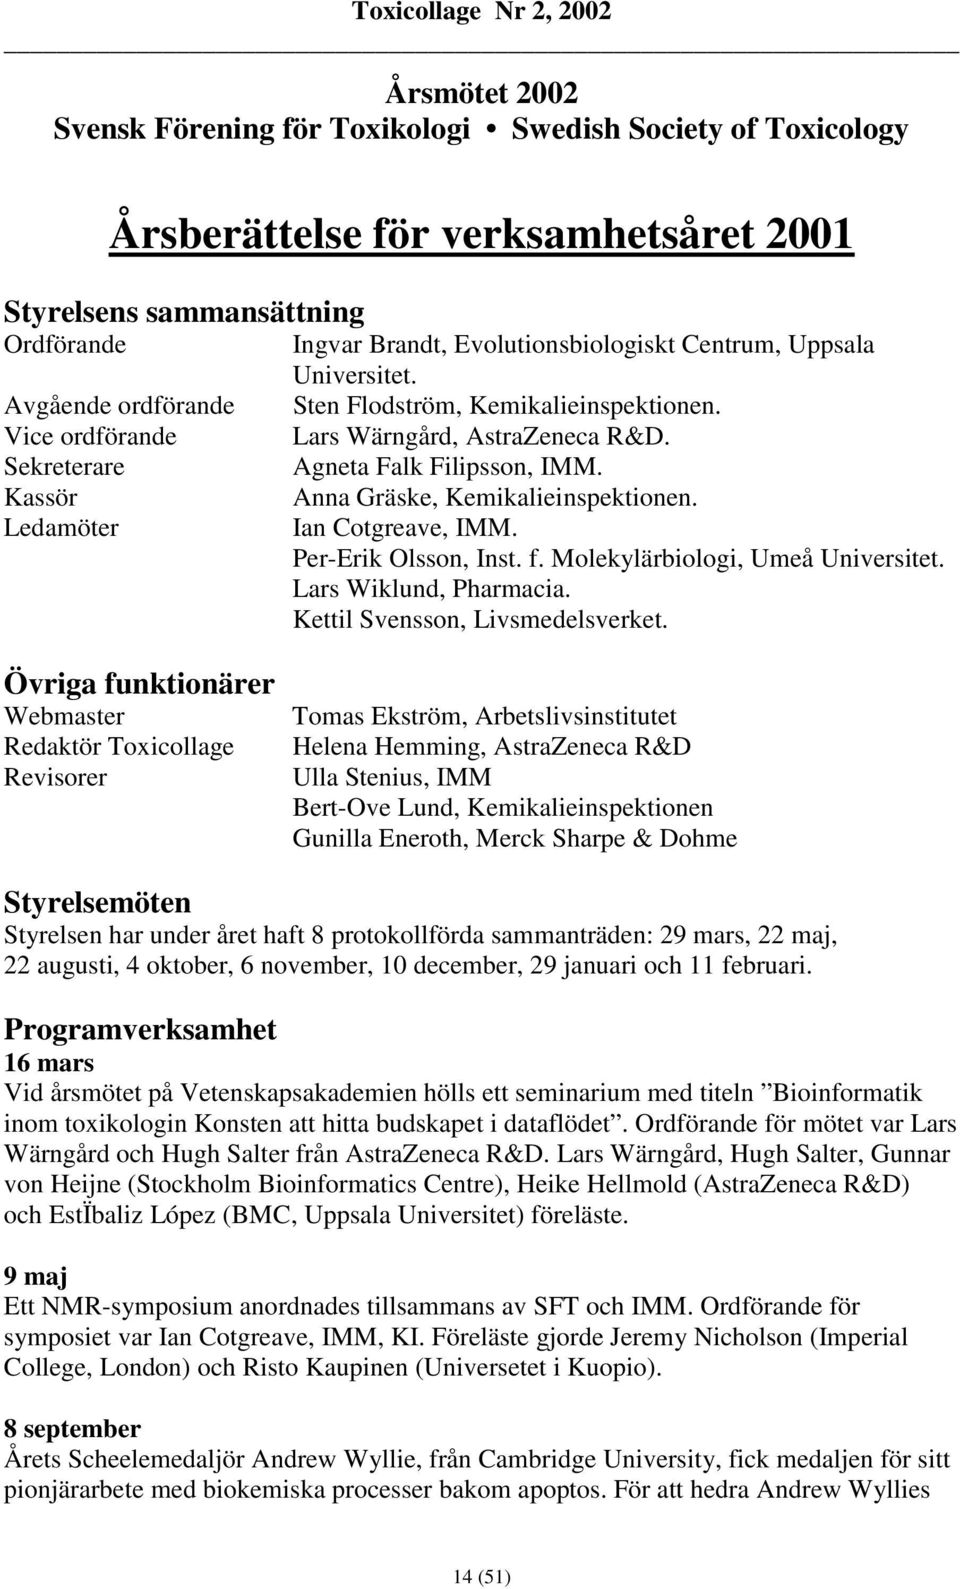 Anna Gräske, Kemikalieinspektionen. Ian Cotgreave, IMM. Per-Erik Olsson, Inst. f. Molekylärbiologi, Umeå Universitet. Lars Wiklund, Pharmacia. Kettil Svensson, Livsmedelsverket.